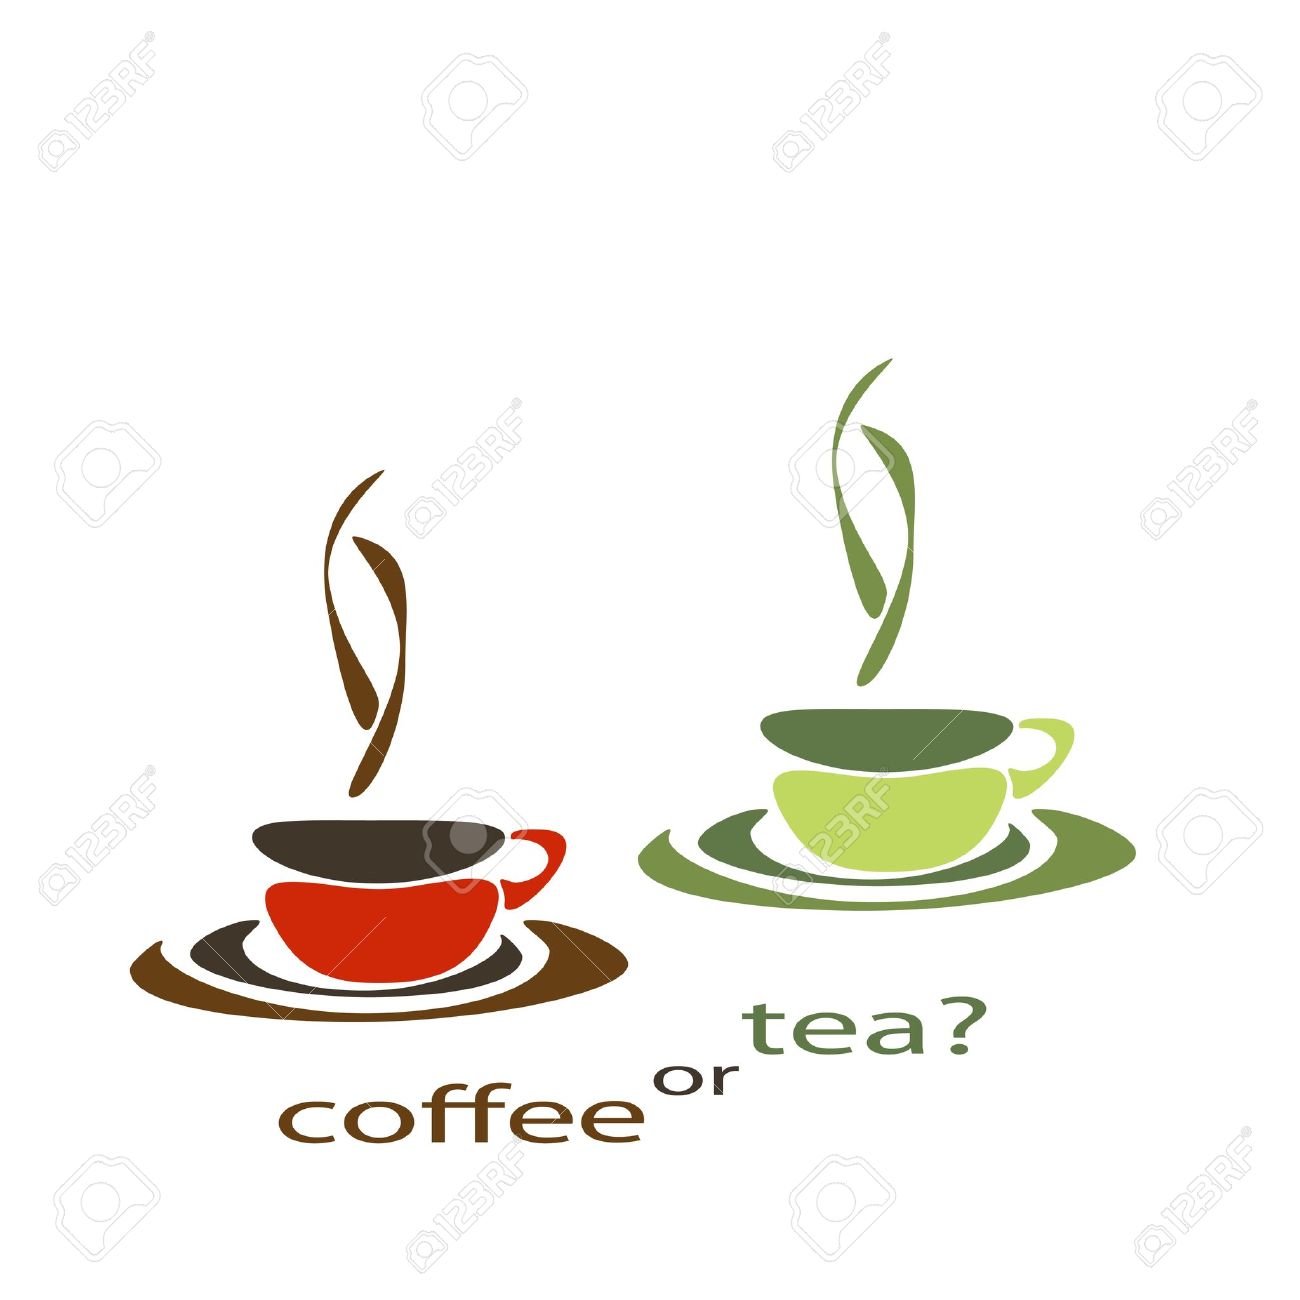 coffee clipart tea coffee